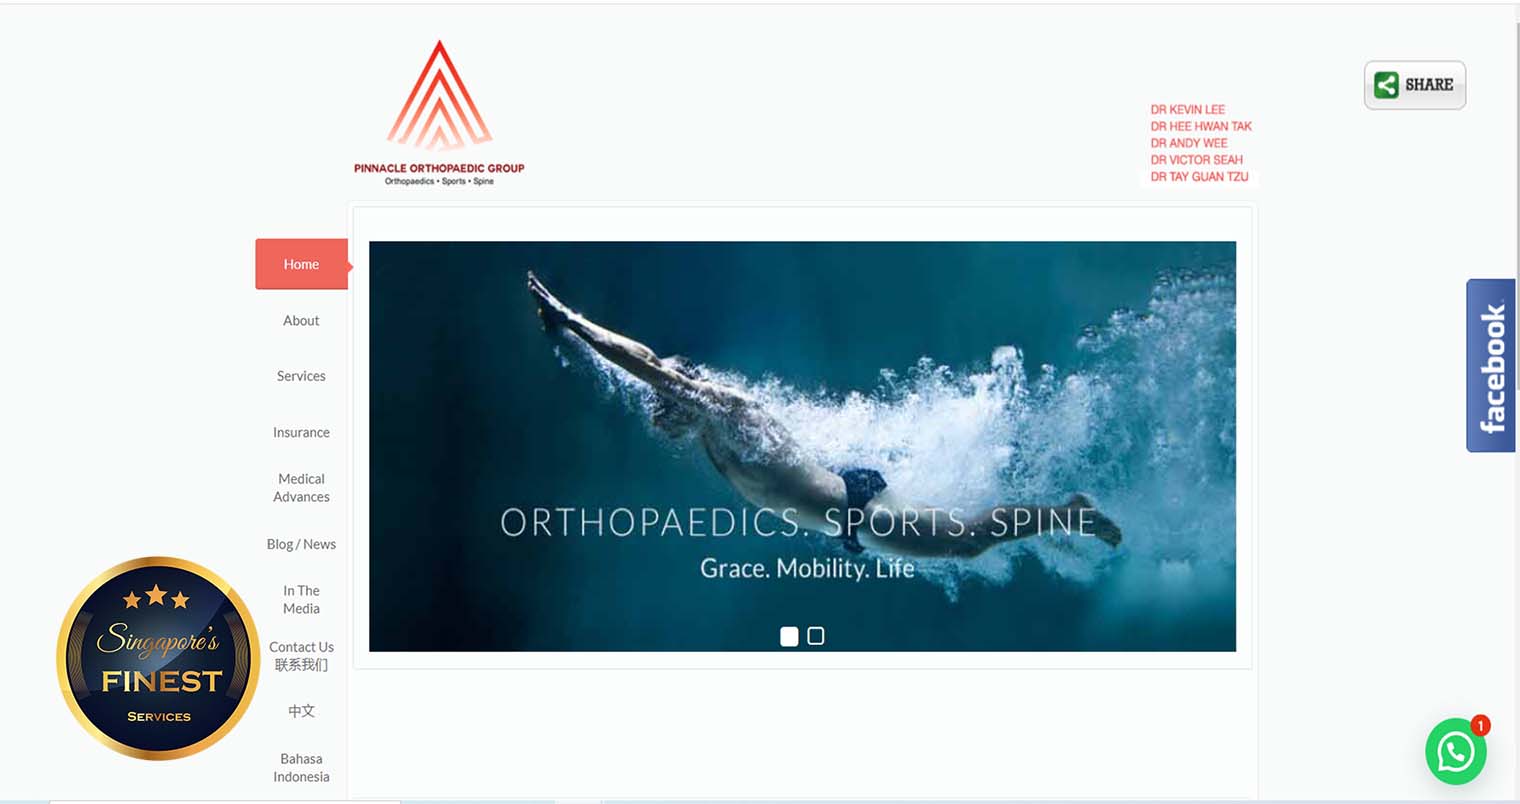 Pinnacle Orthopaedic Group - Orthopedic Centers in Singapore